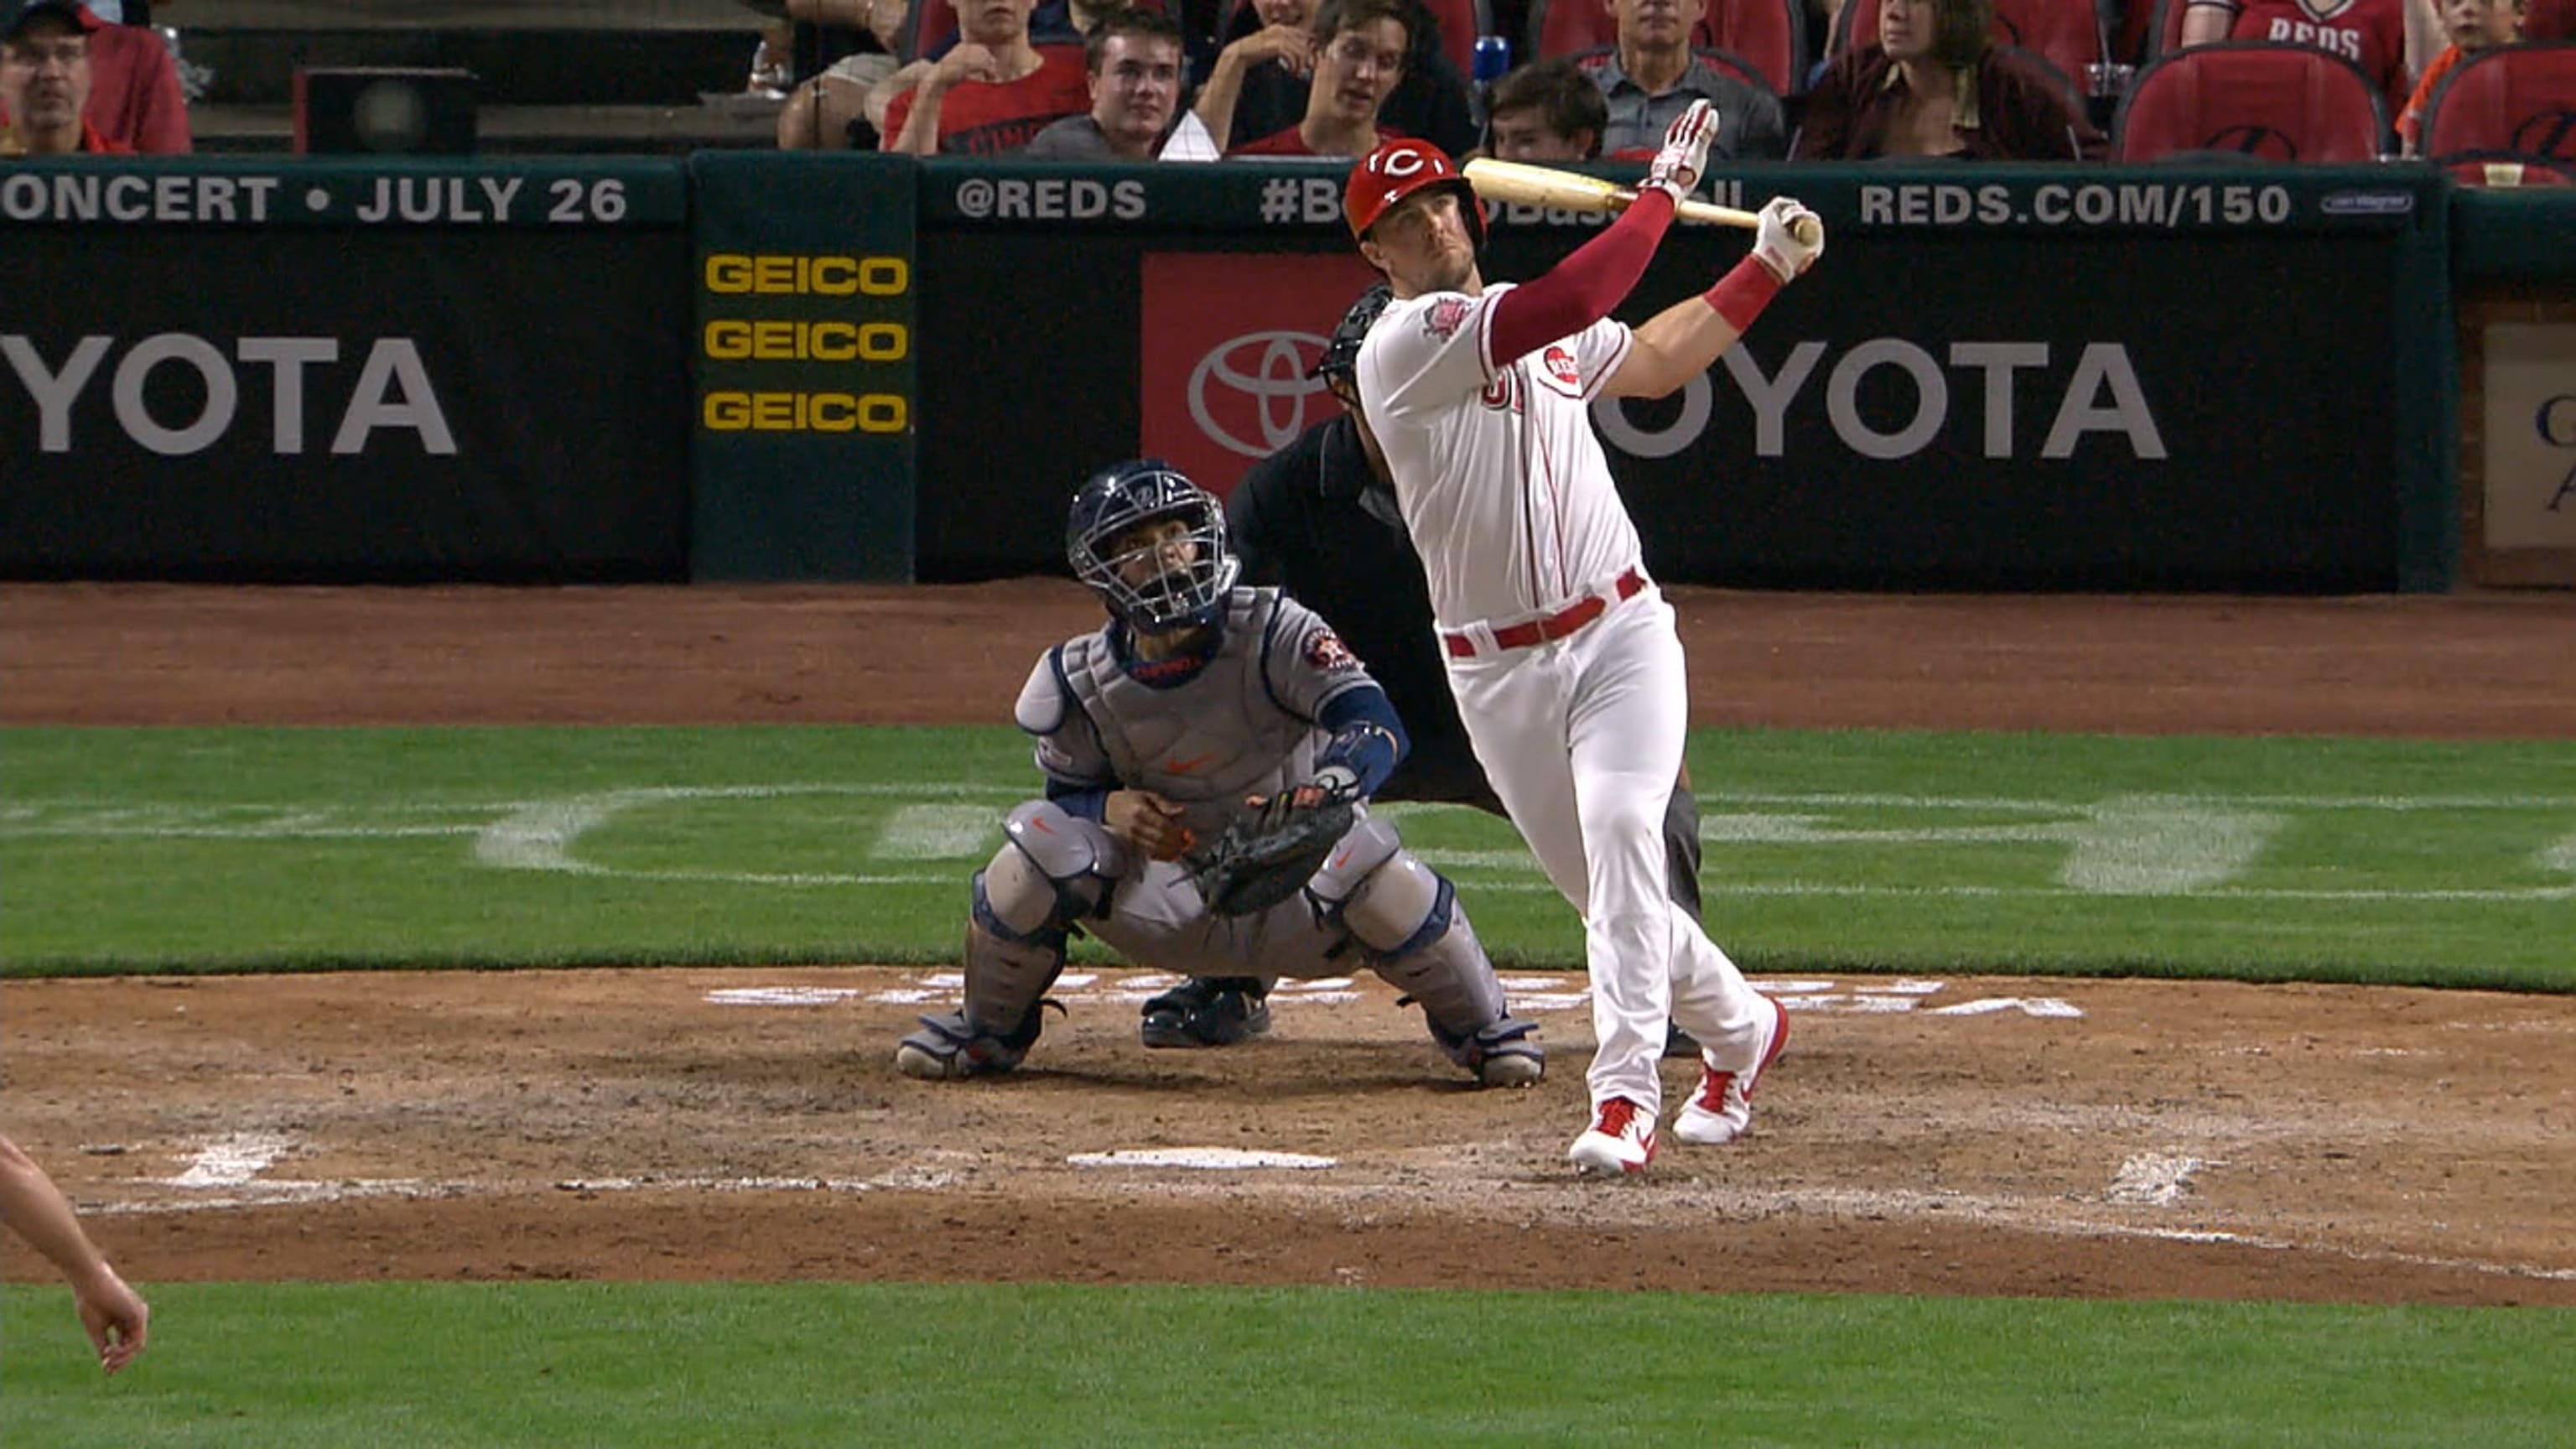 Adjusting to catcher, Kyle Farmer continues to impress Cincinnati